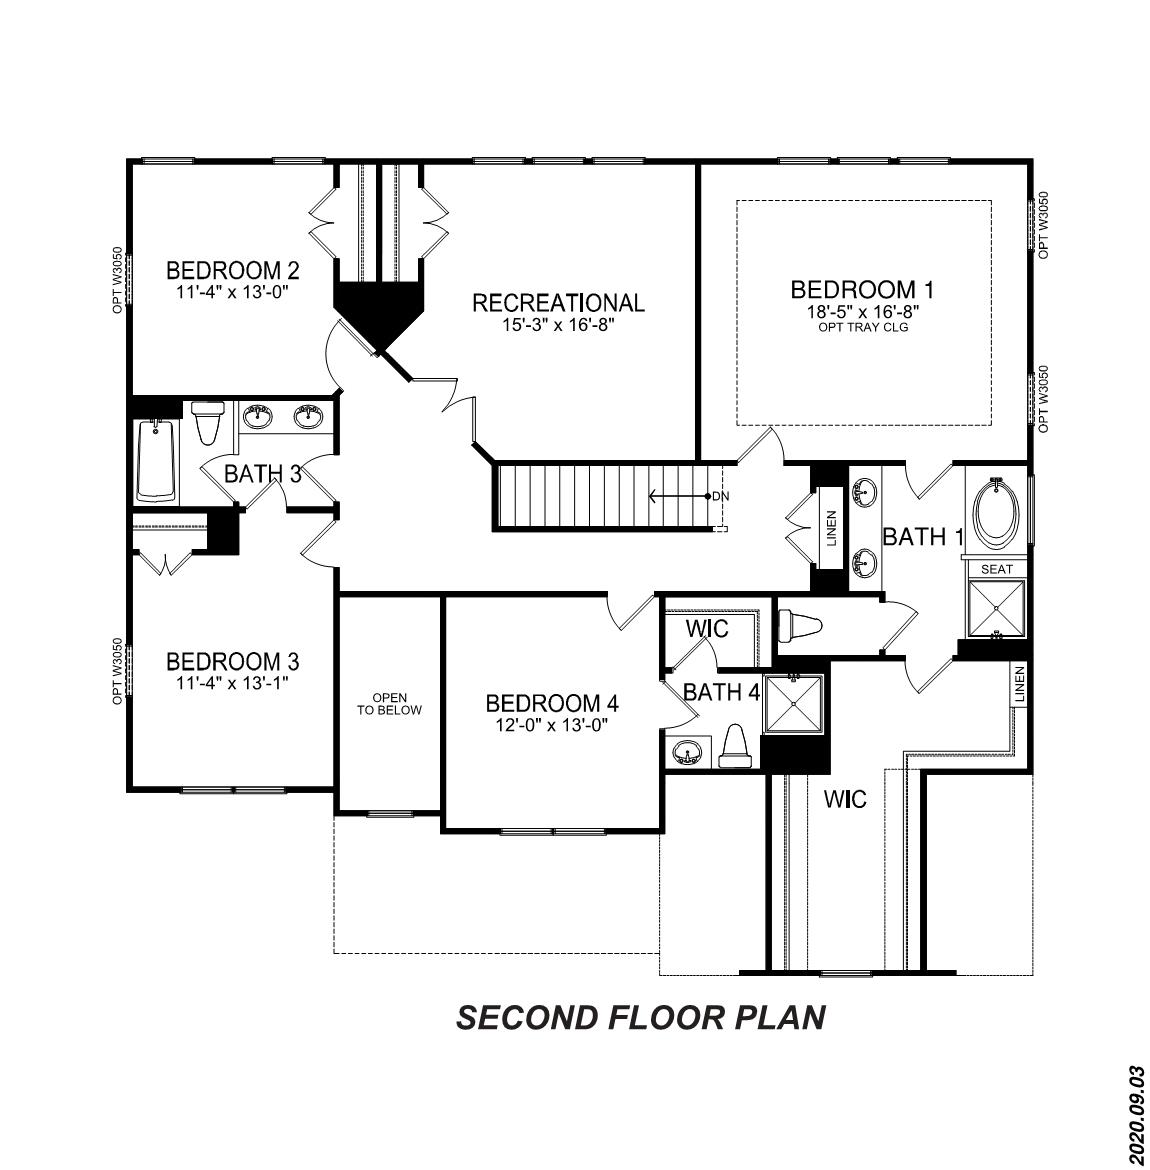 Washington second floor plan